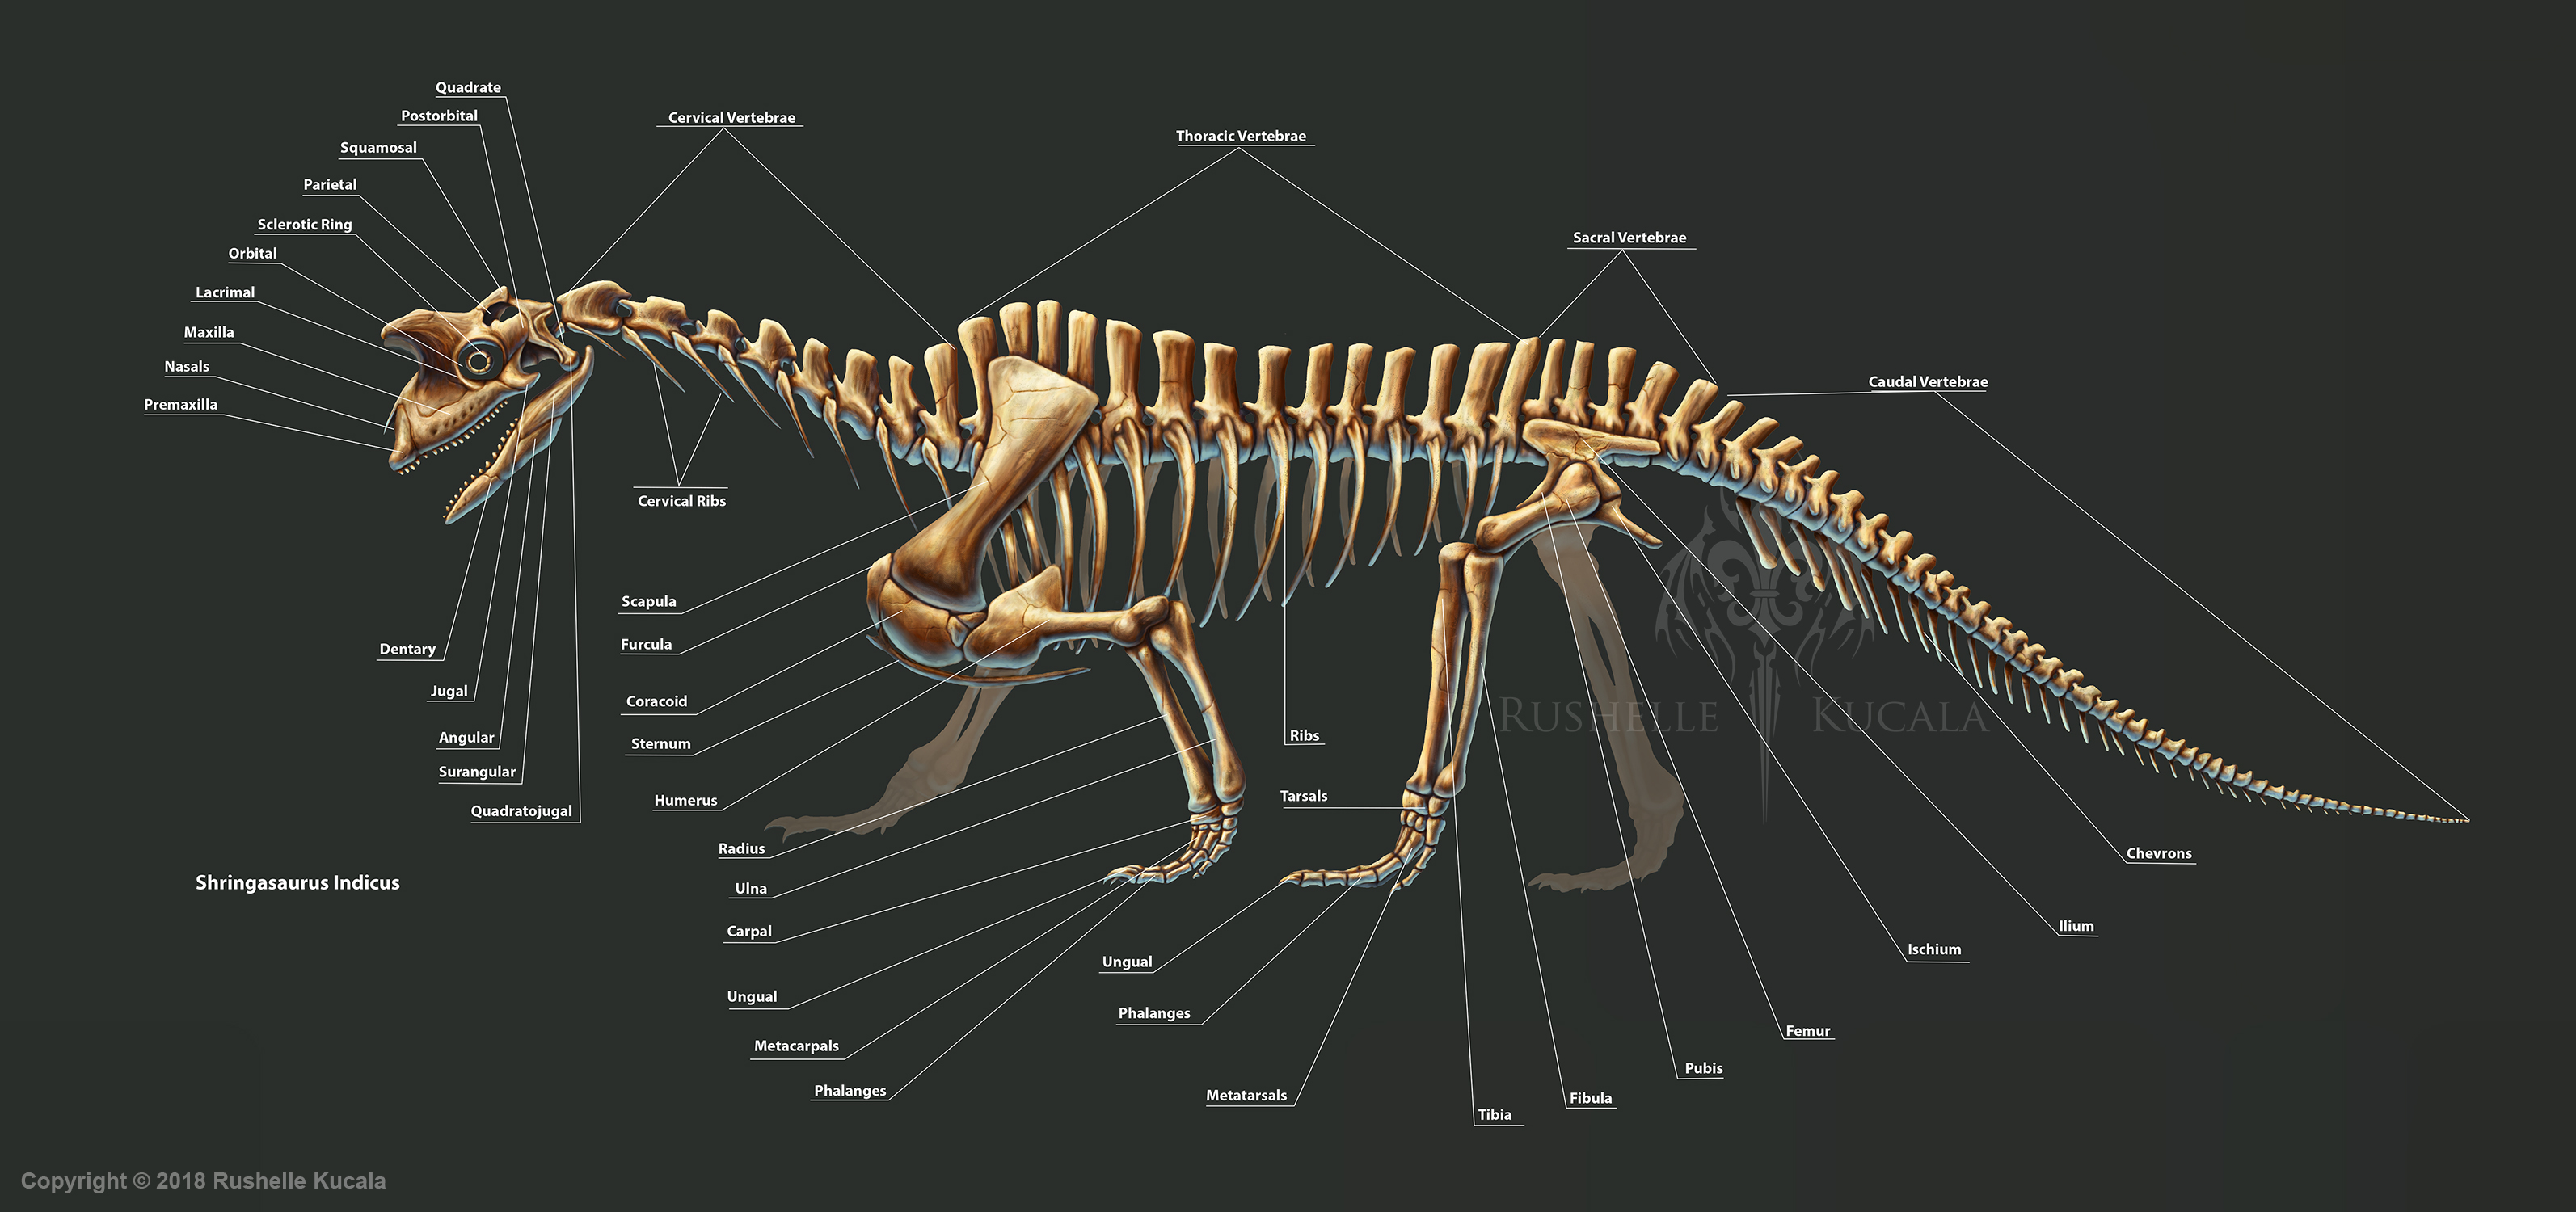 Shringasaurus Indicus Skeleton Study